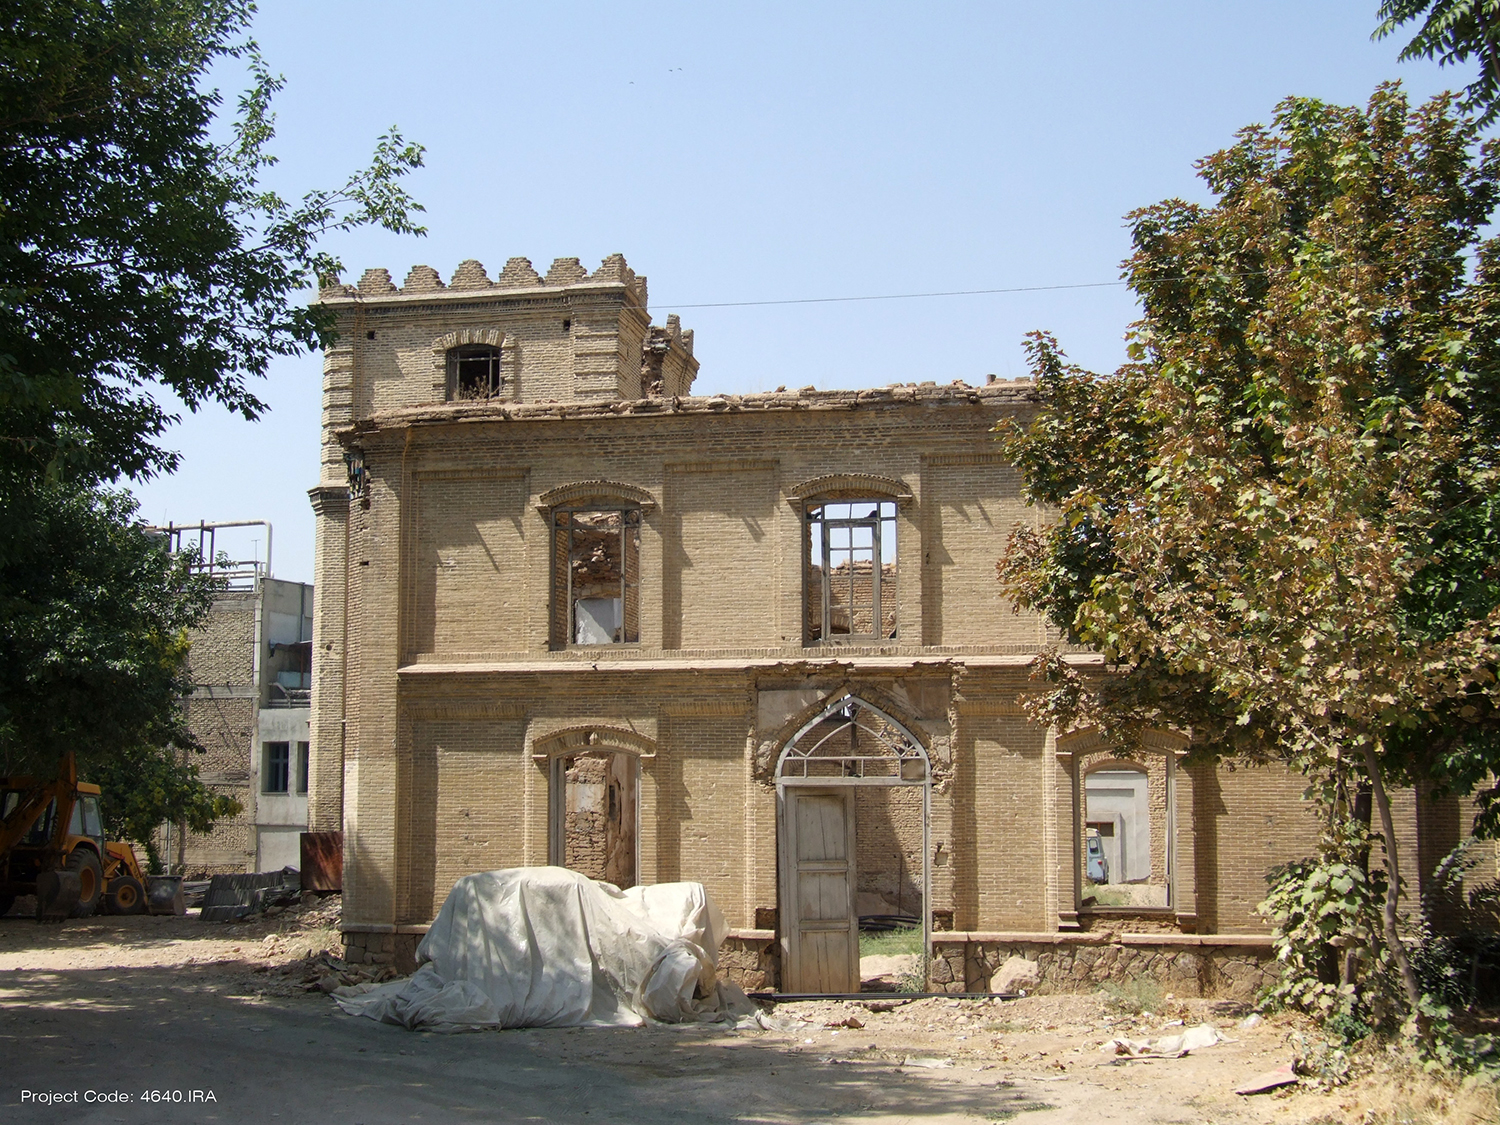 North facade of the ruin